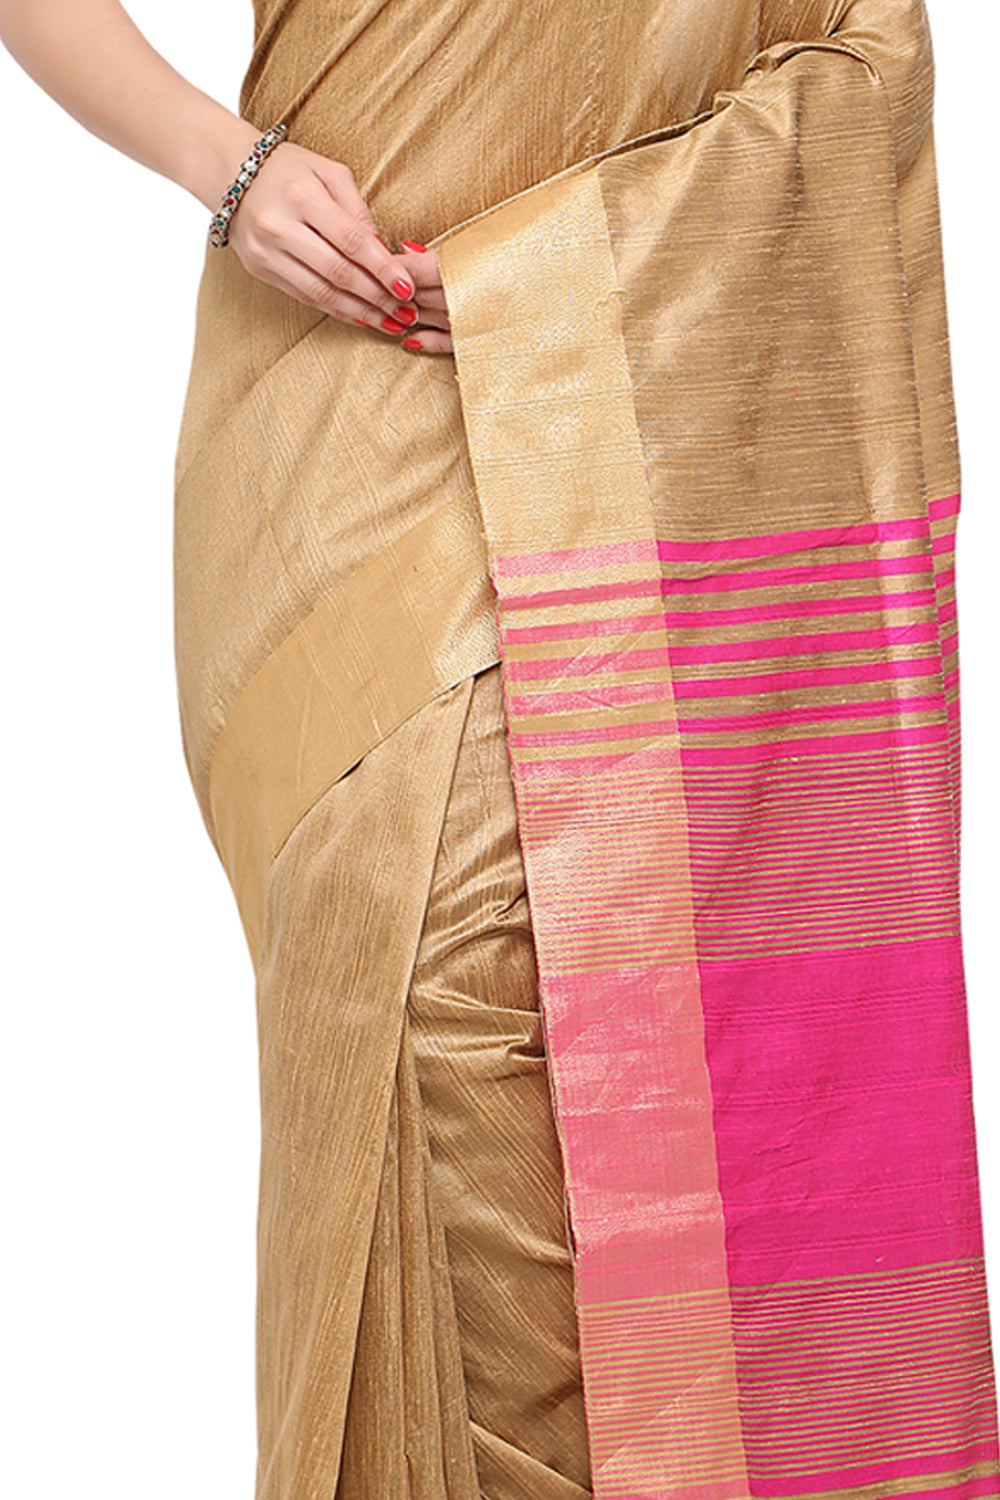 Beige & Pink Colour Silk  Woven Saree